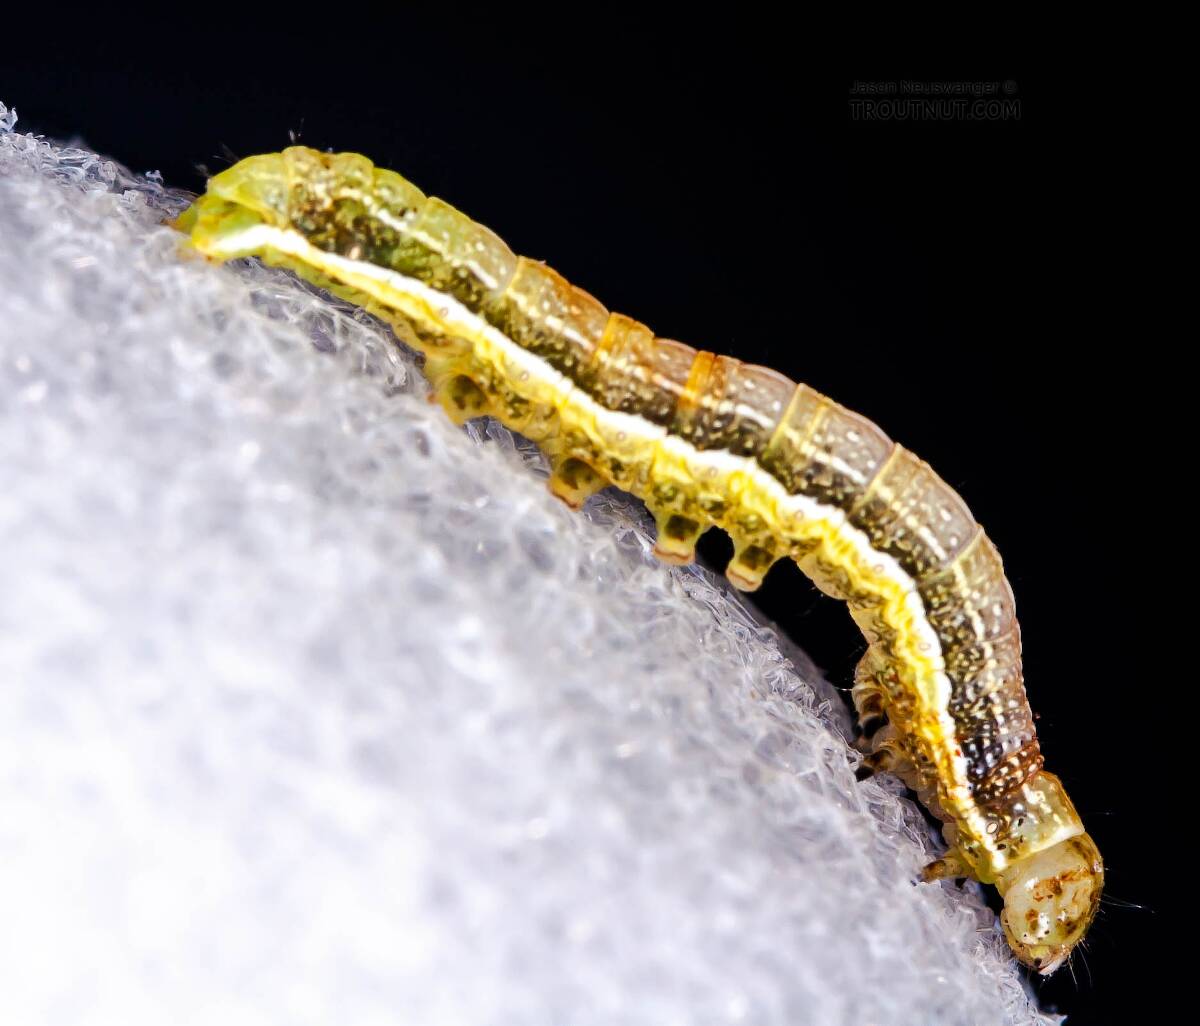 Geometridae (Inchworm) Moth Larva